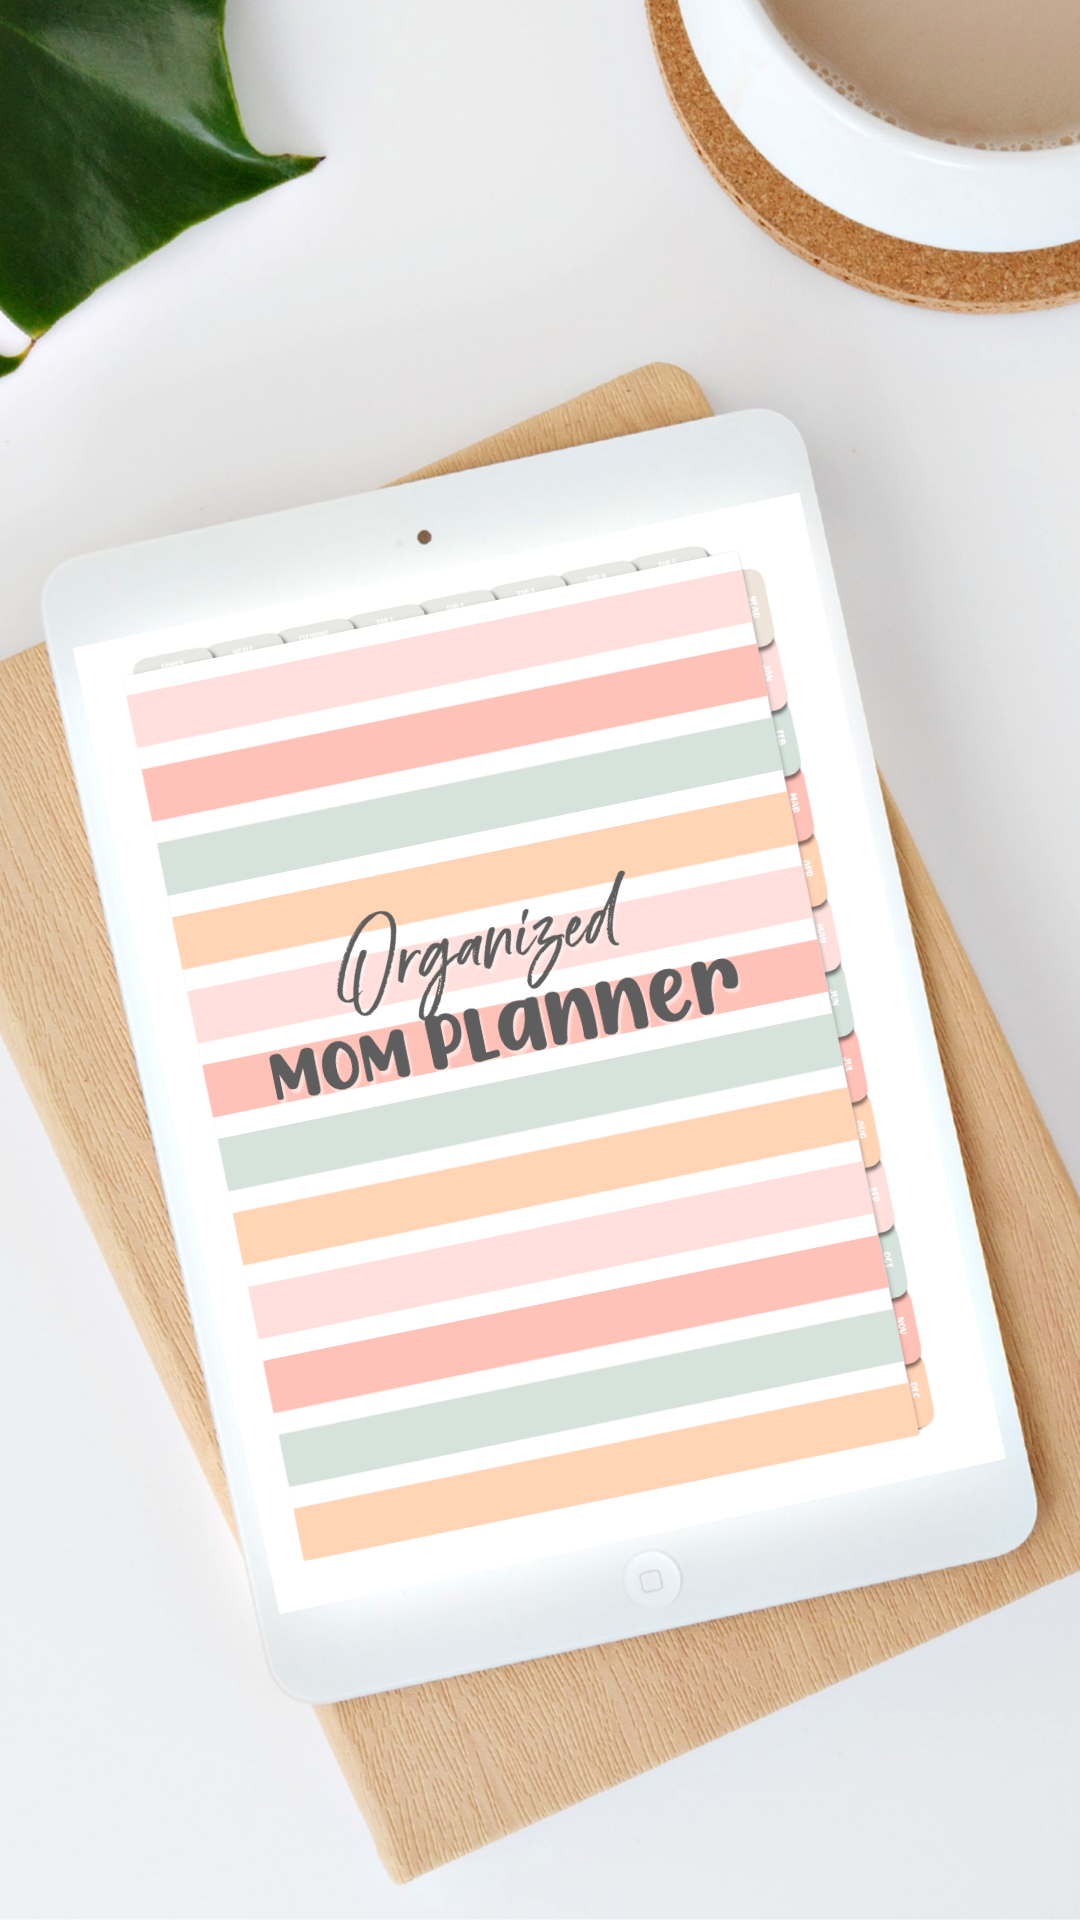 organized mom planner from slayathomeplanners.com